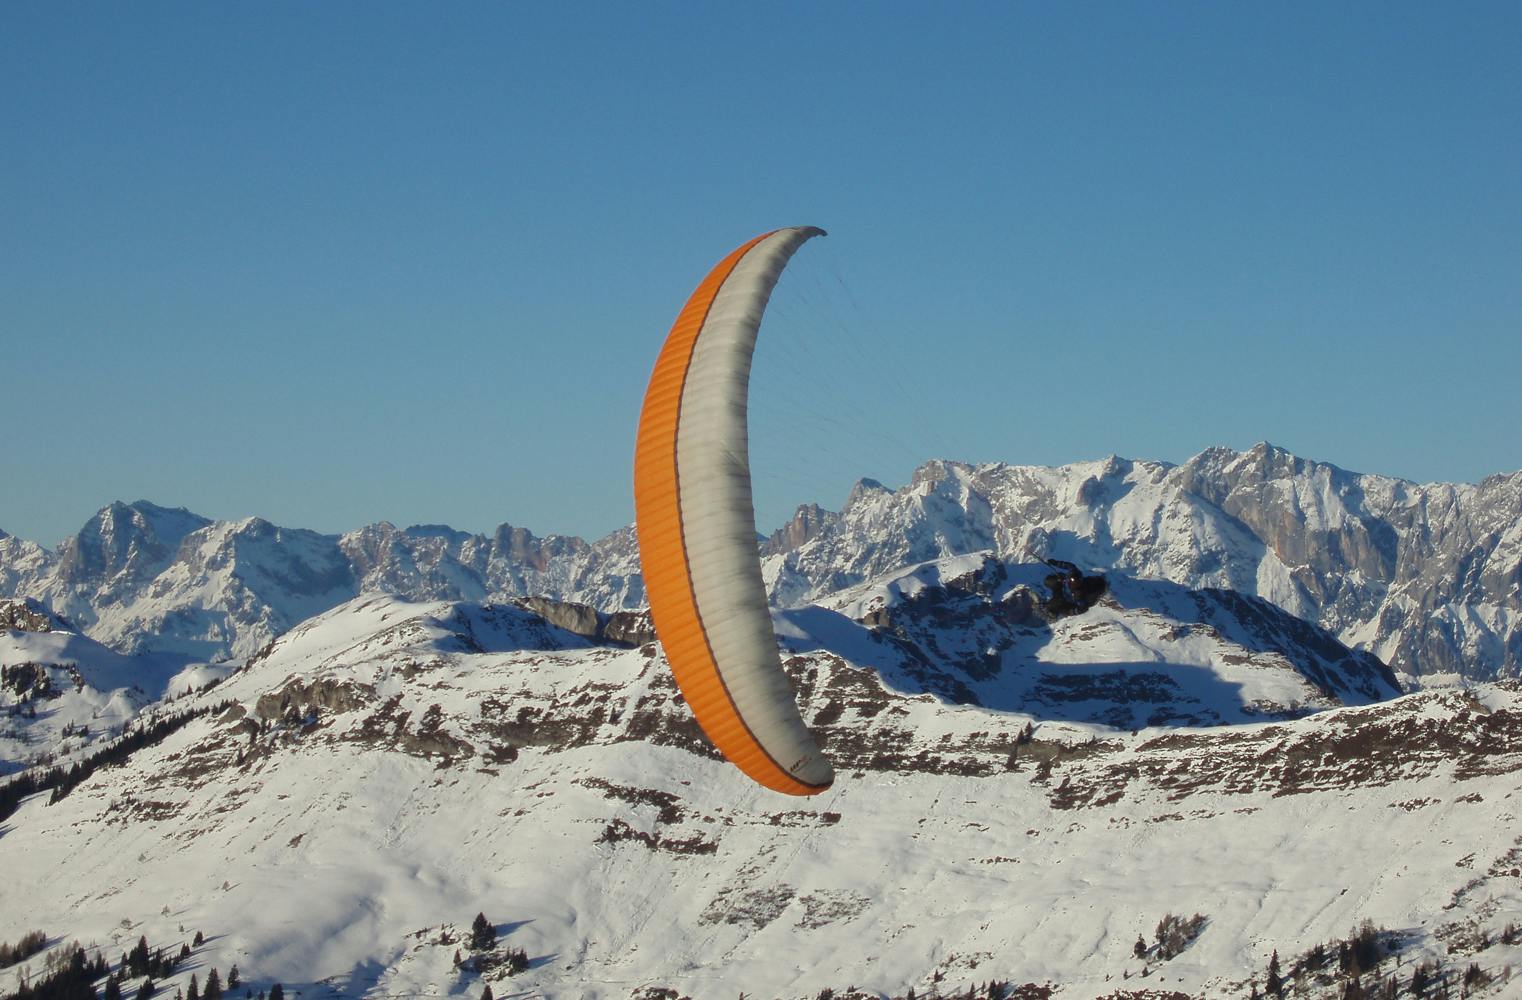 Winteraction | Gleitschirm Tandemflug im Skizirkus Amade